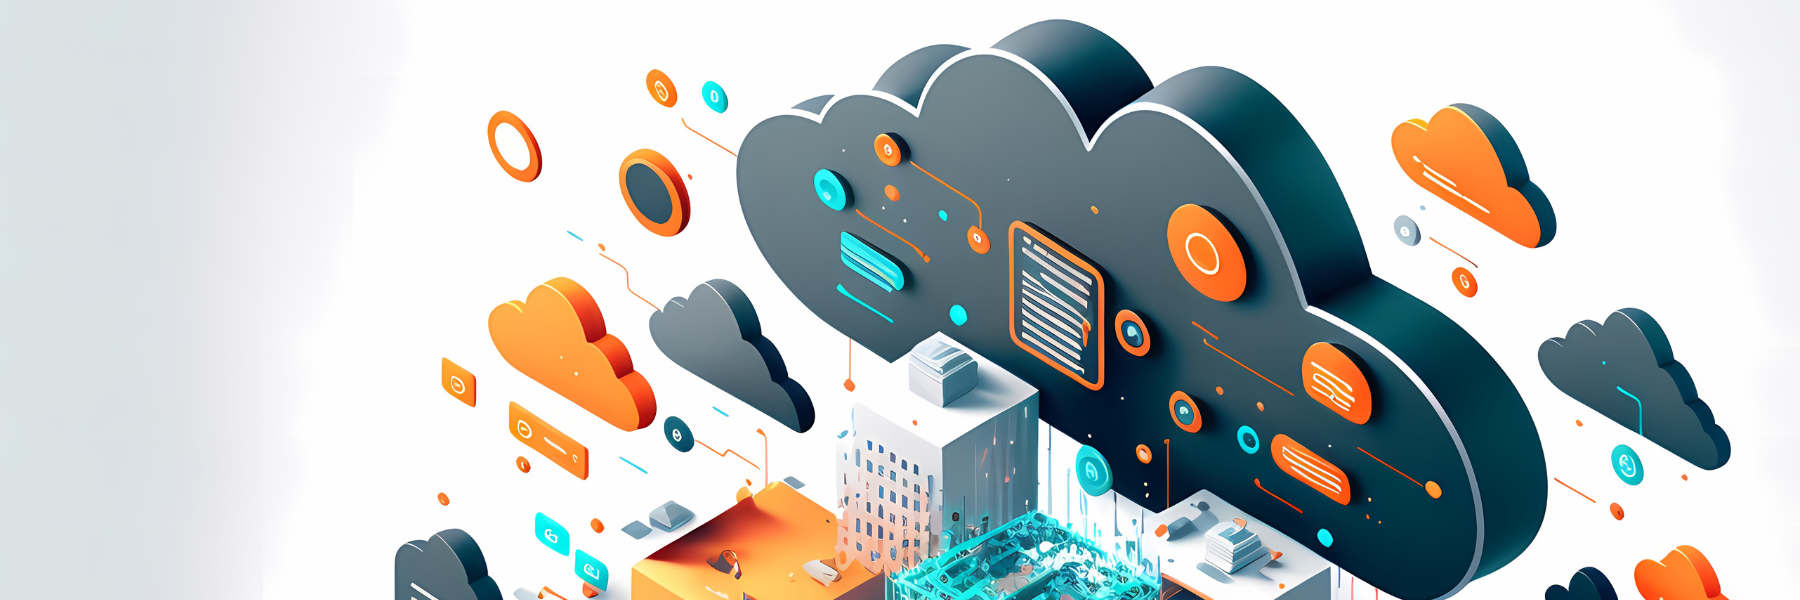 cloud it network illustration